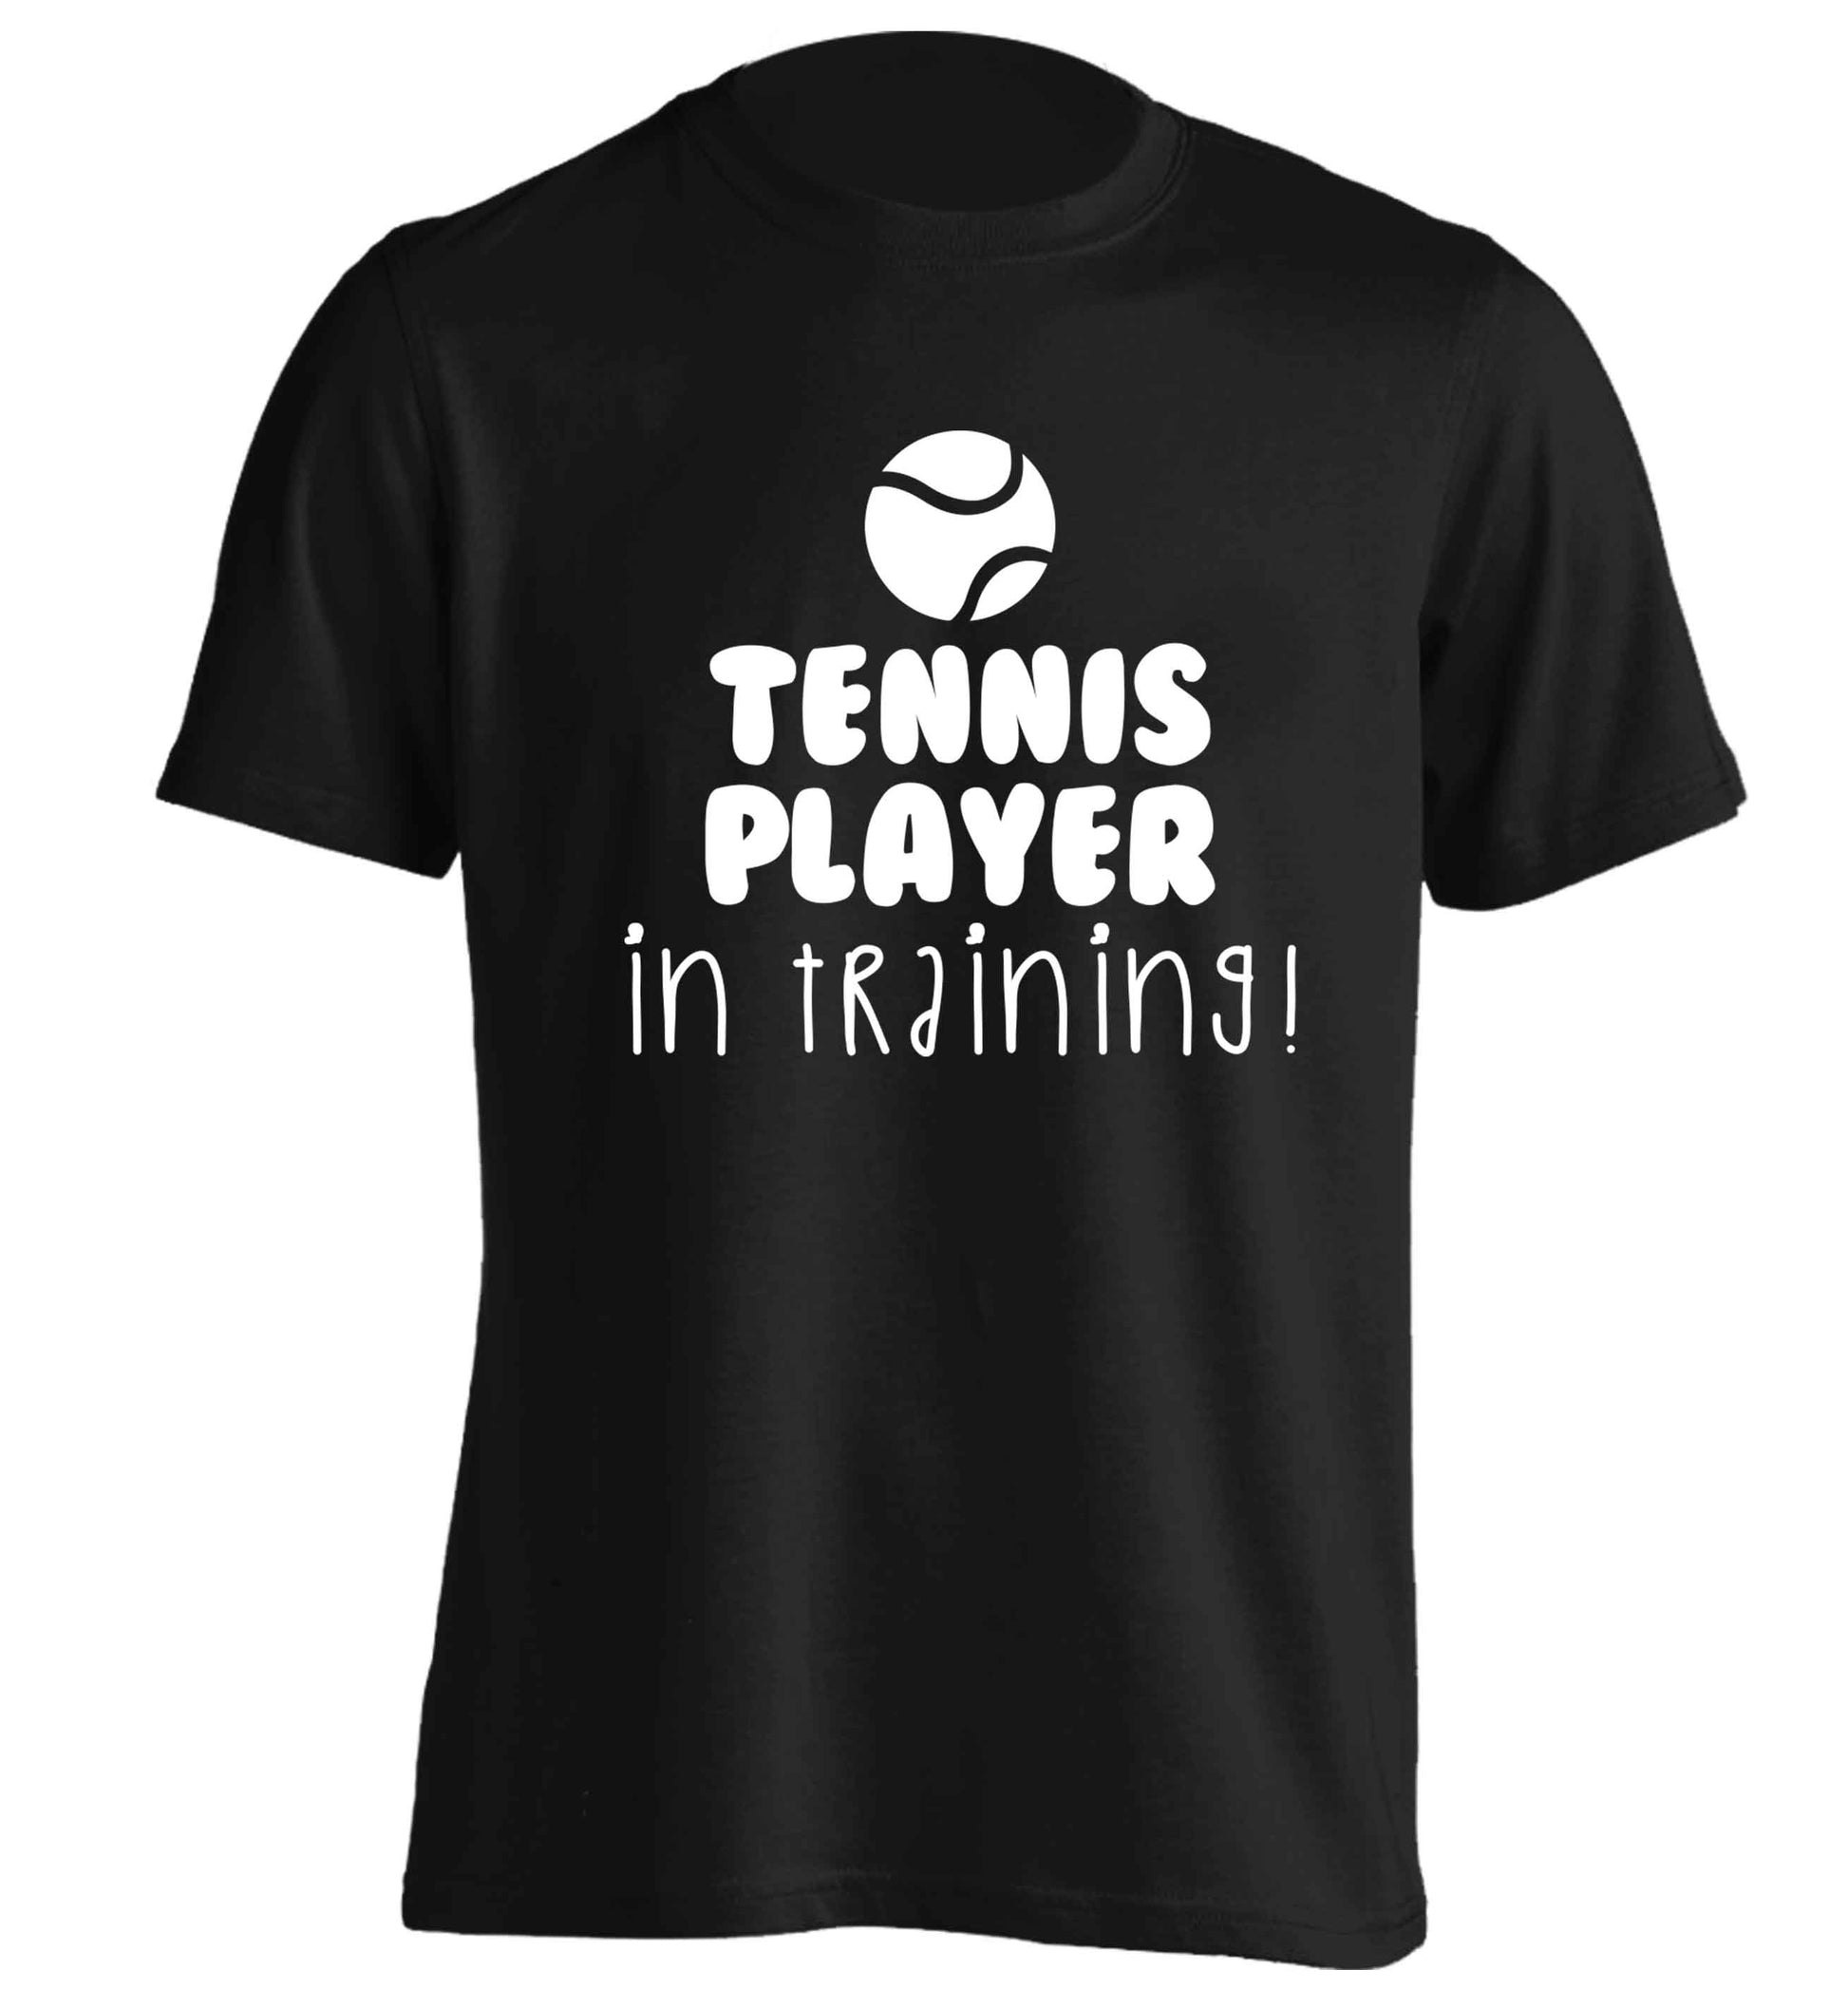 Tennis player in training adults unisex black Tshirt 2XL